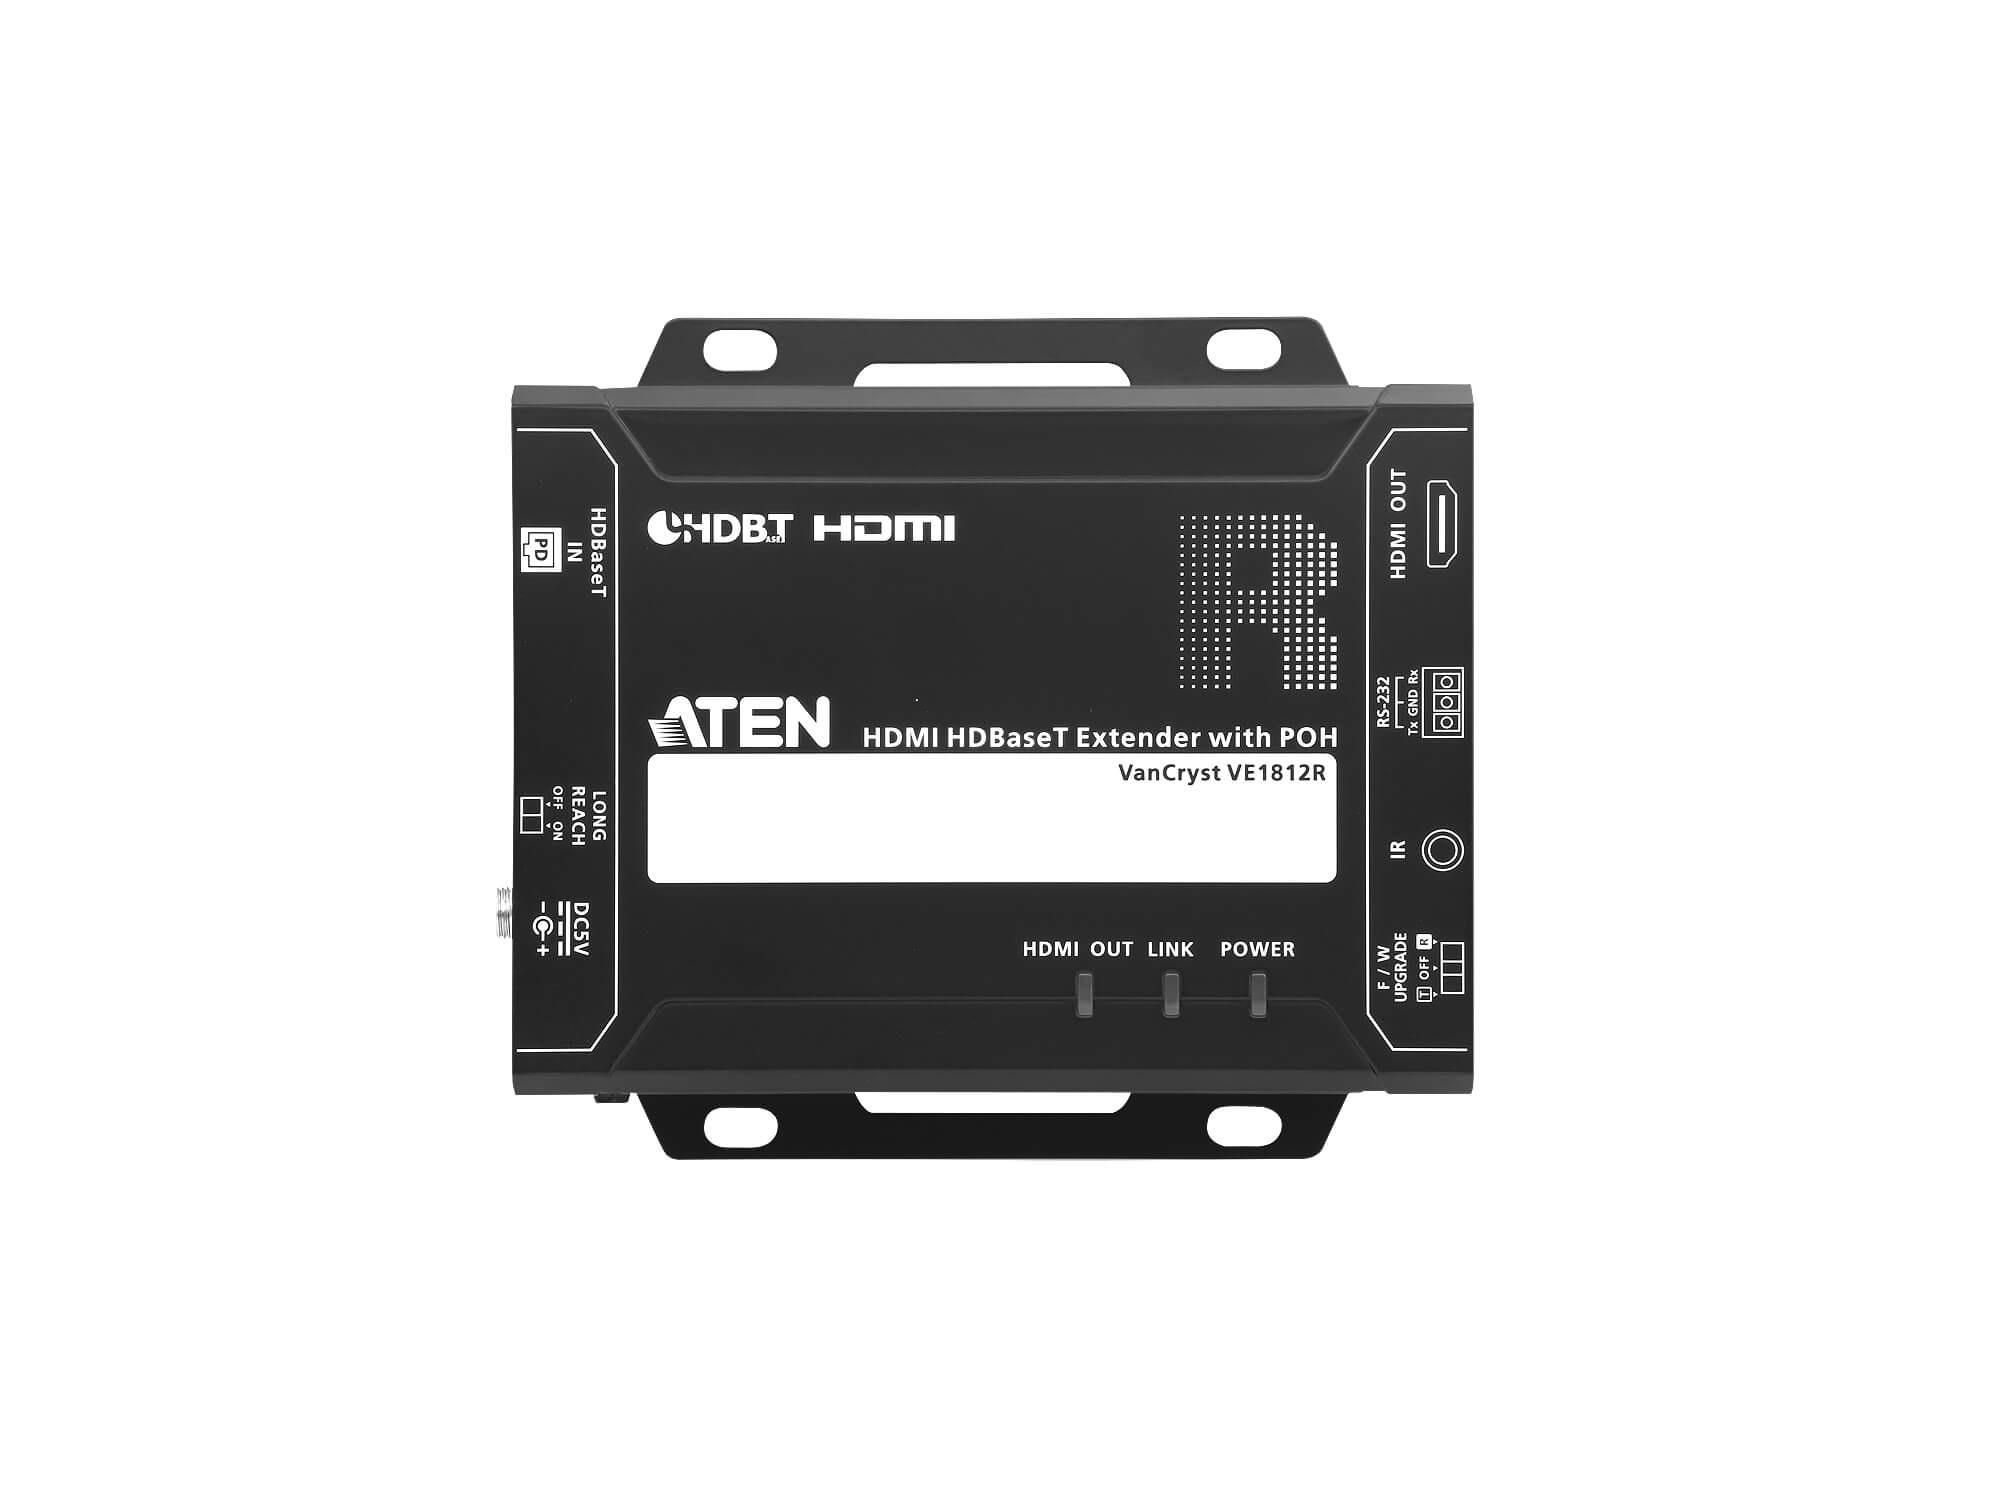 VE1812 HDMI HDBaseT Extender(Transmitter/Receiver) Kit with POH/4K 100m by Aten